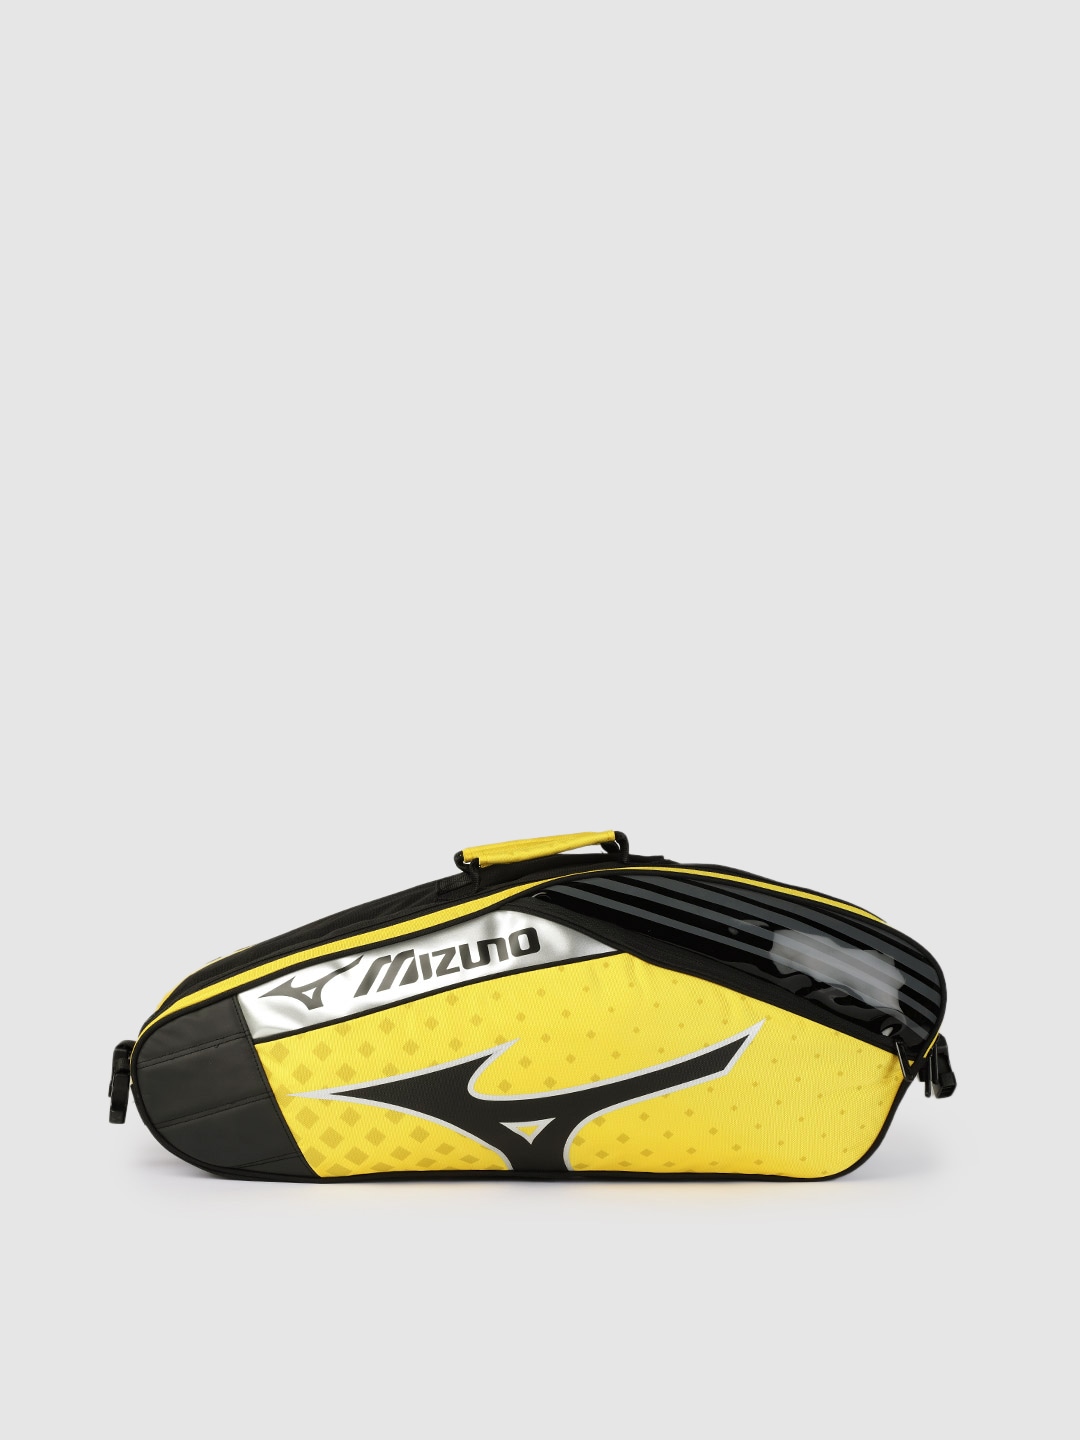 Mizuno Unisex Yellow & Black MZ Racquet Bag Price in India